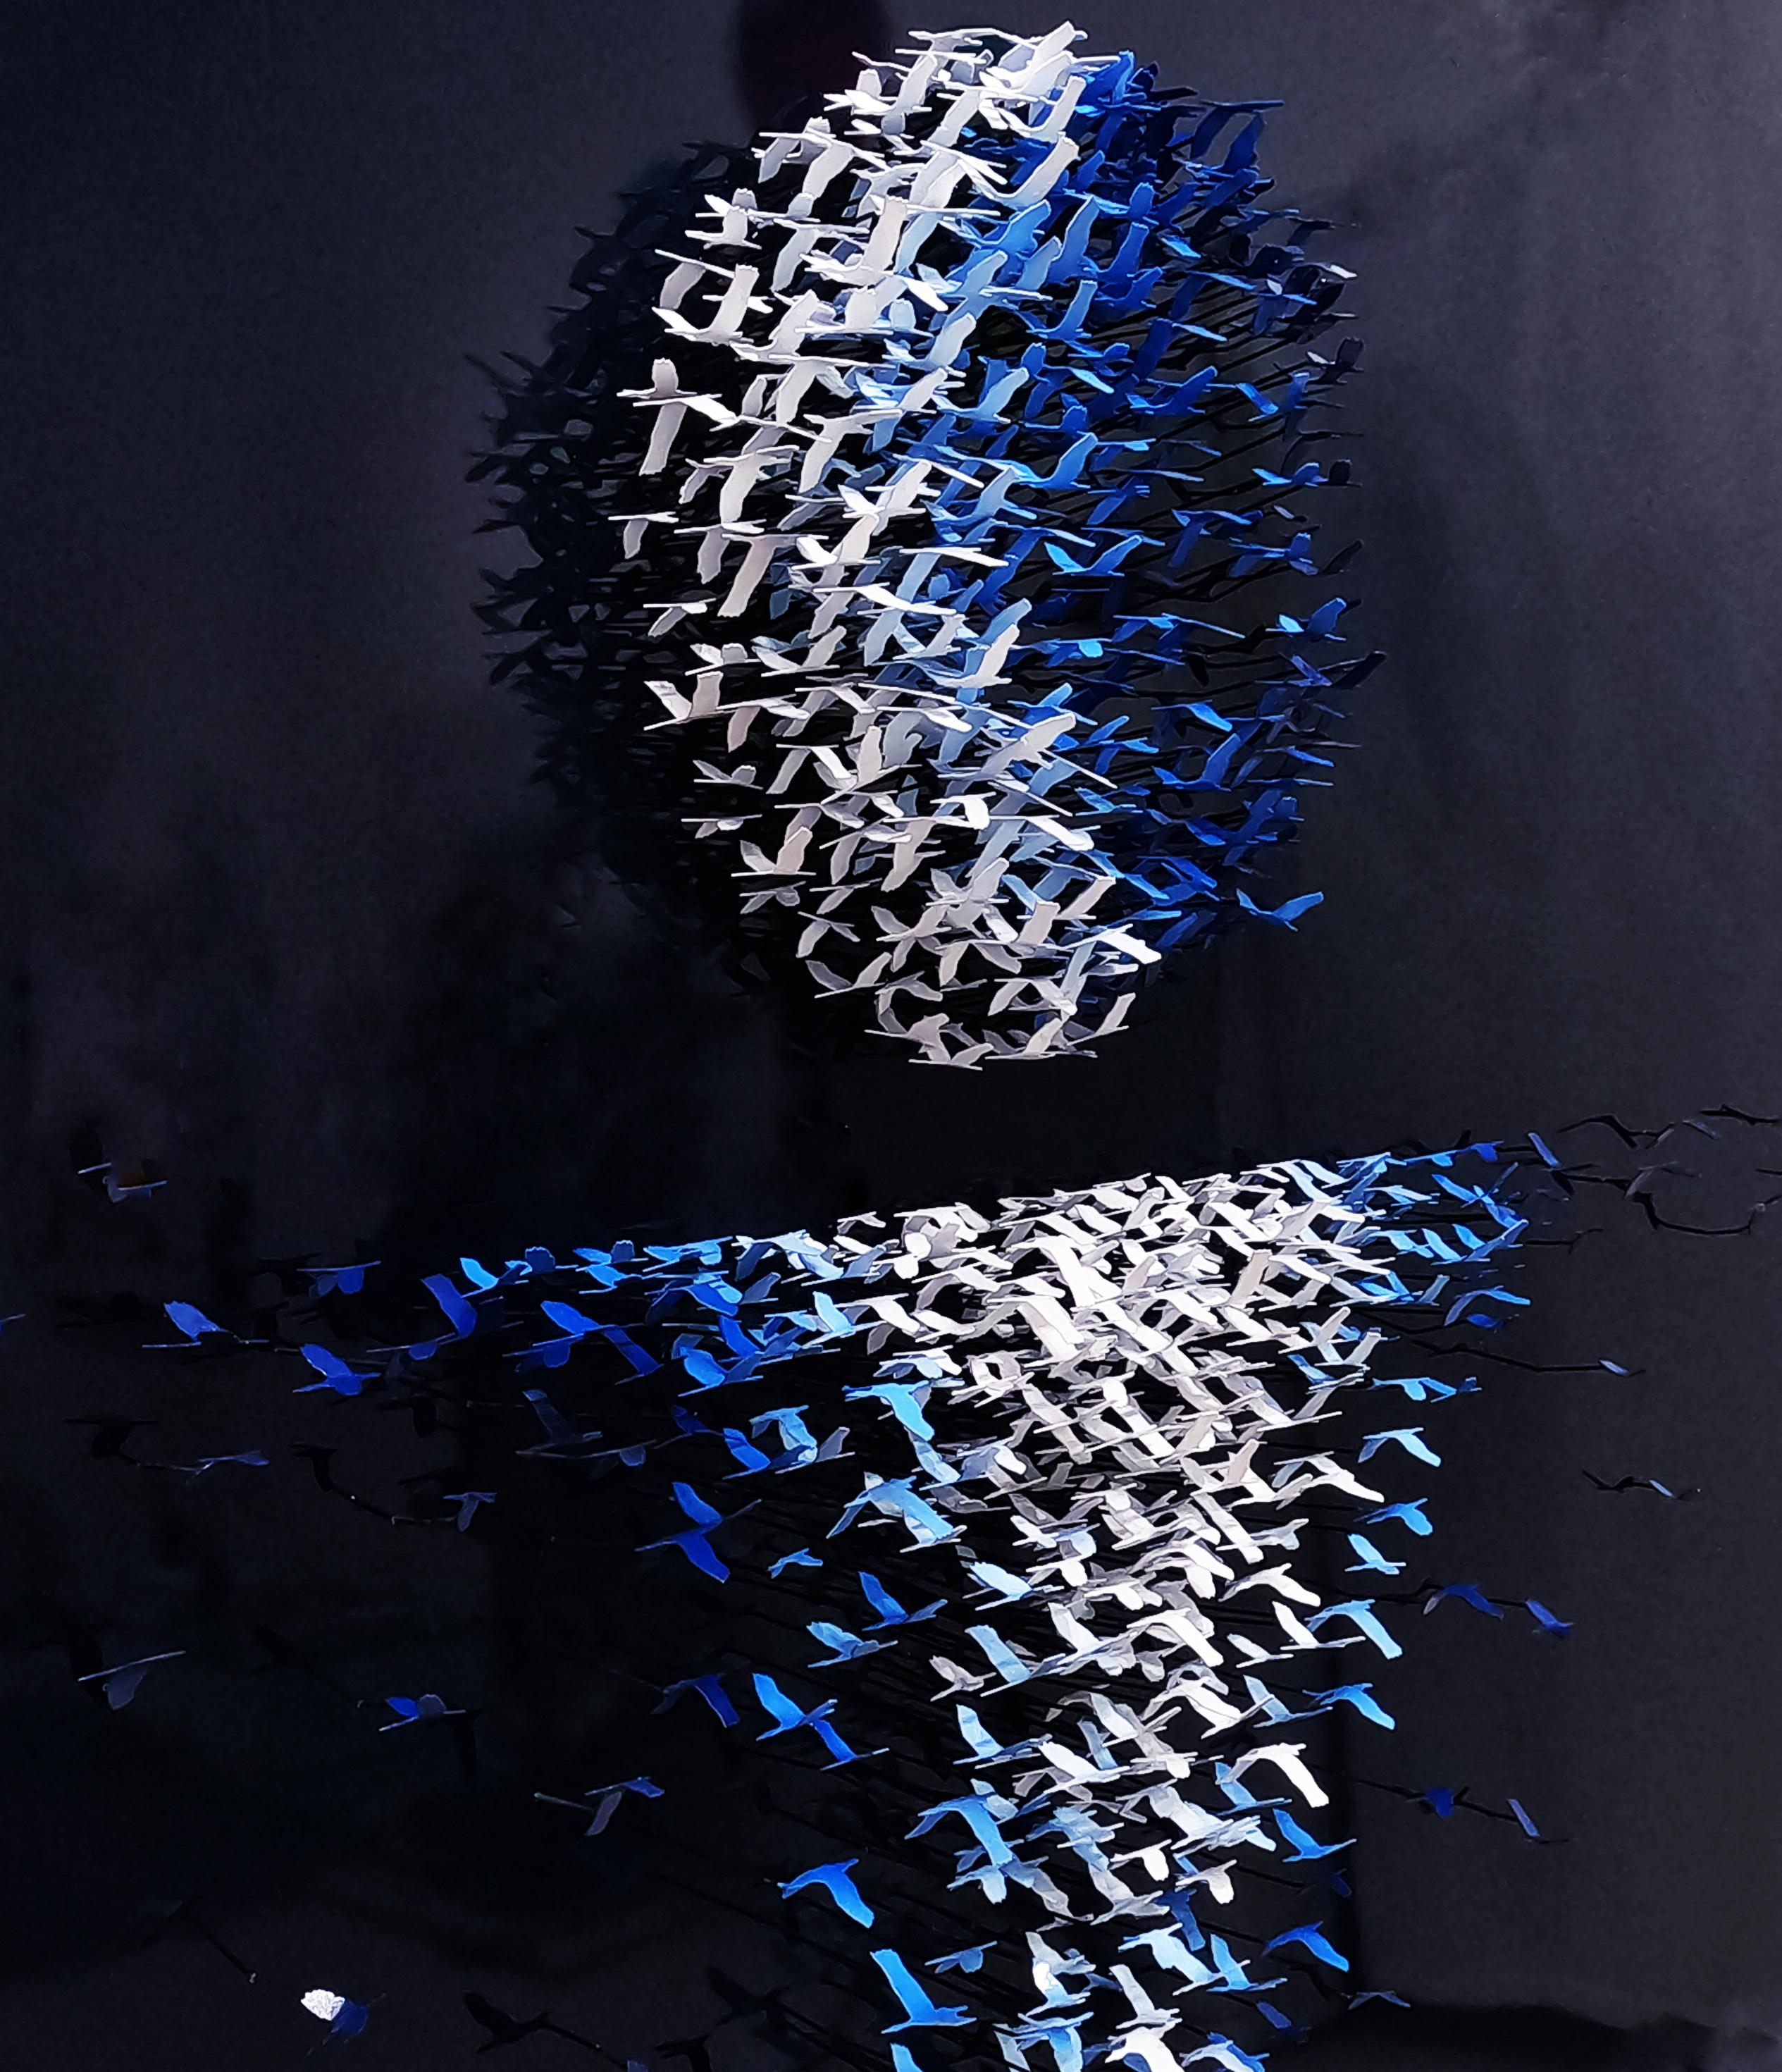 Moonlight, Mixed Media Metal Wall Sculpture - Contemporary Mixed Media Art by Joel Amit